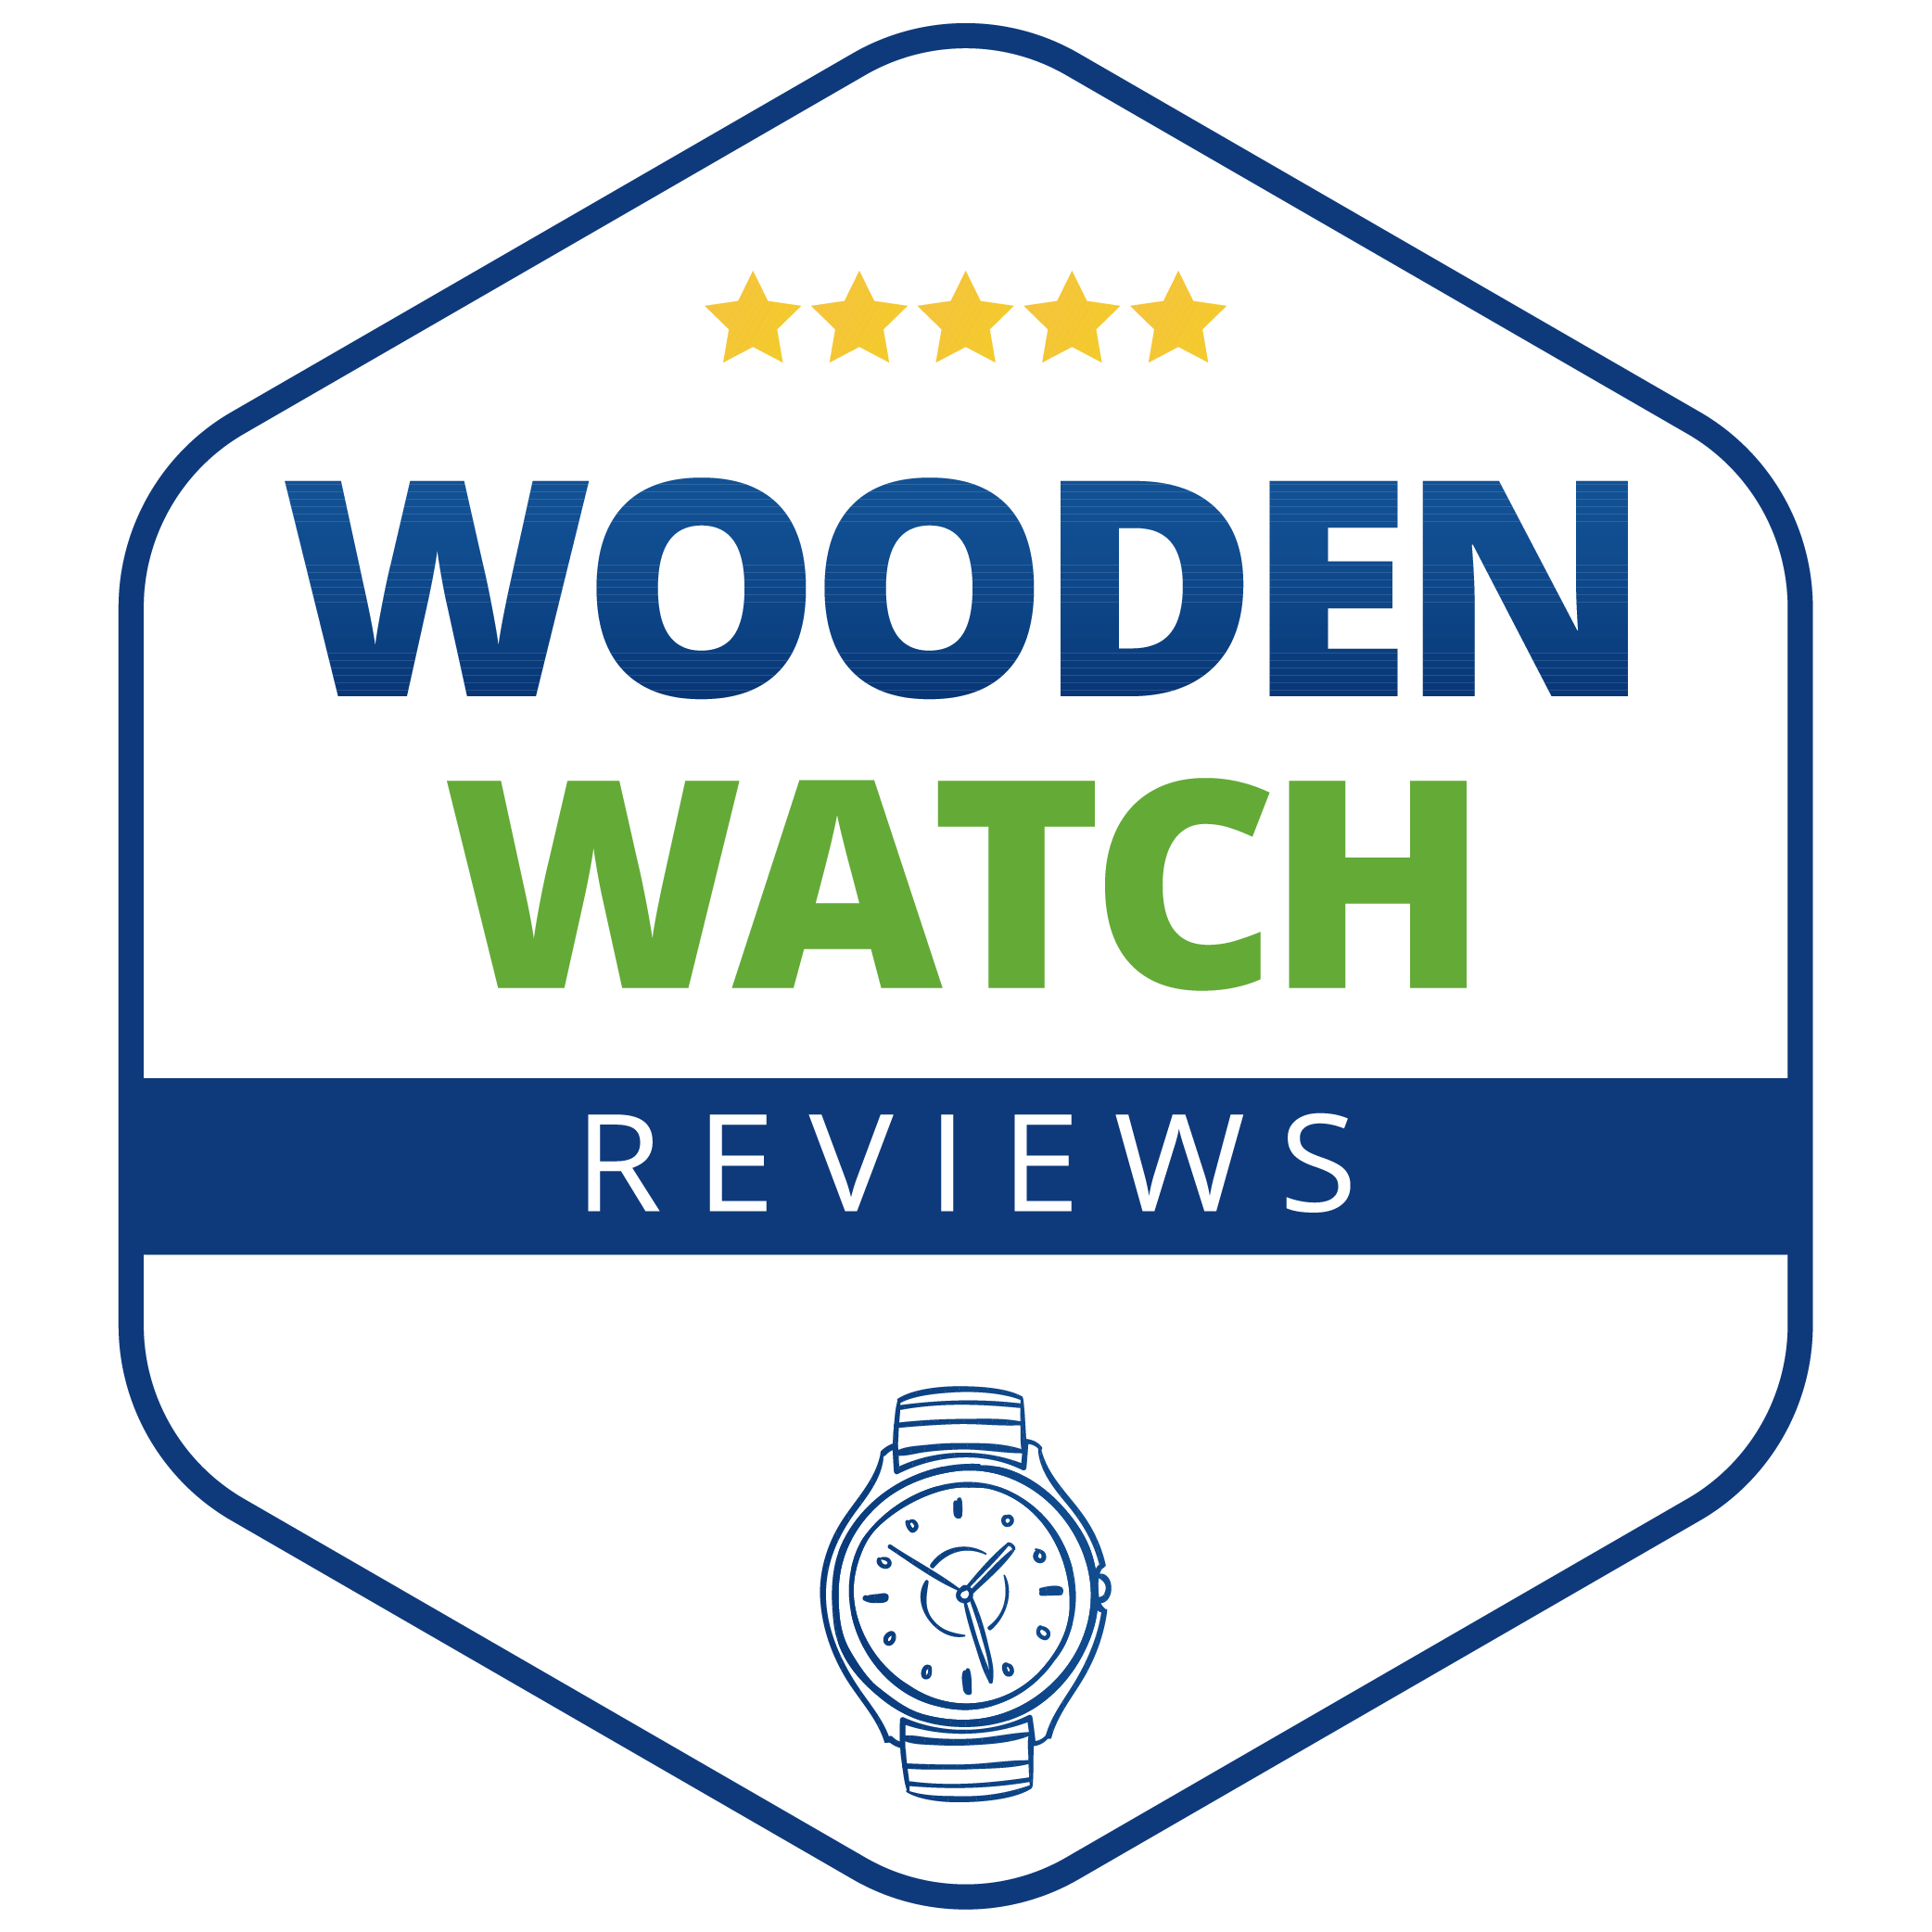 Wooden Watch Reviews